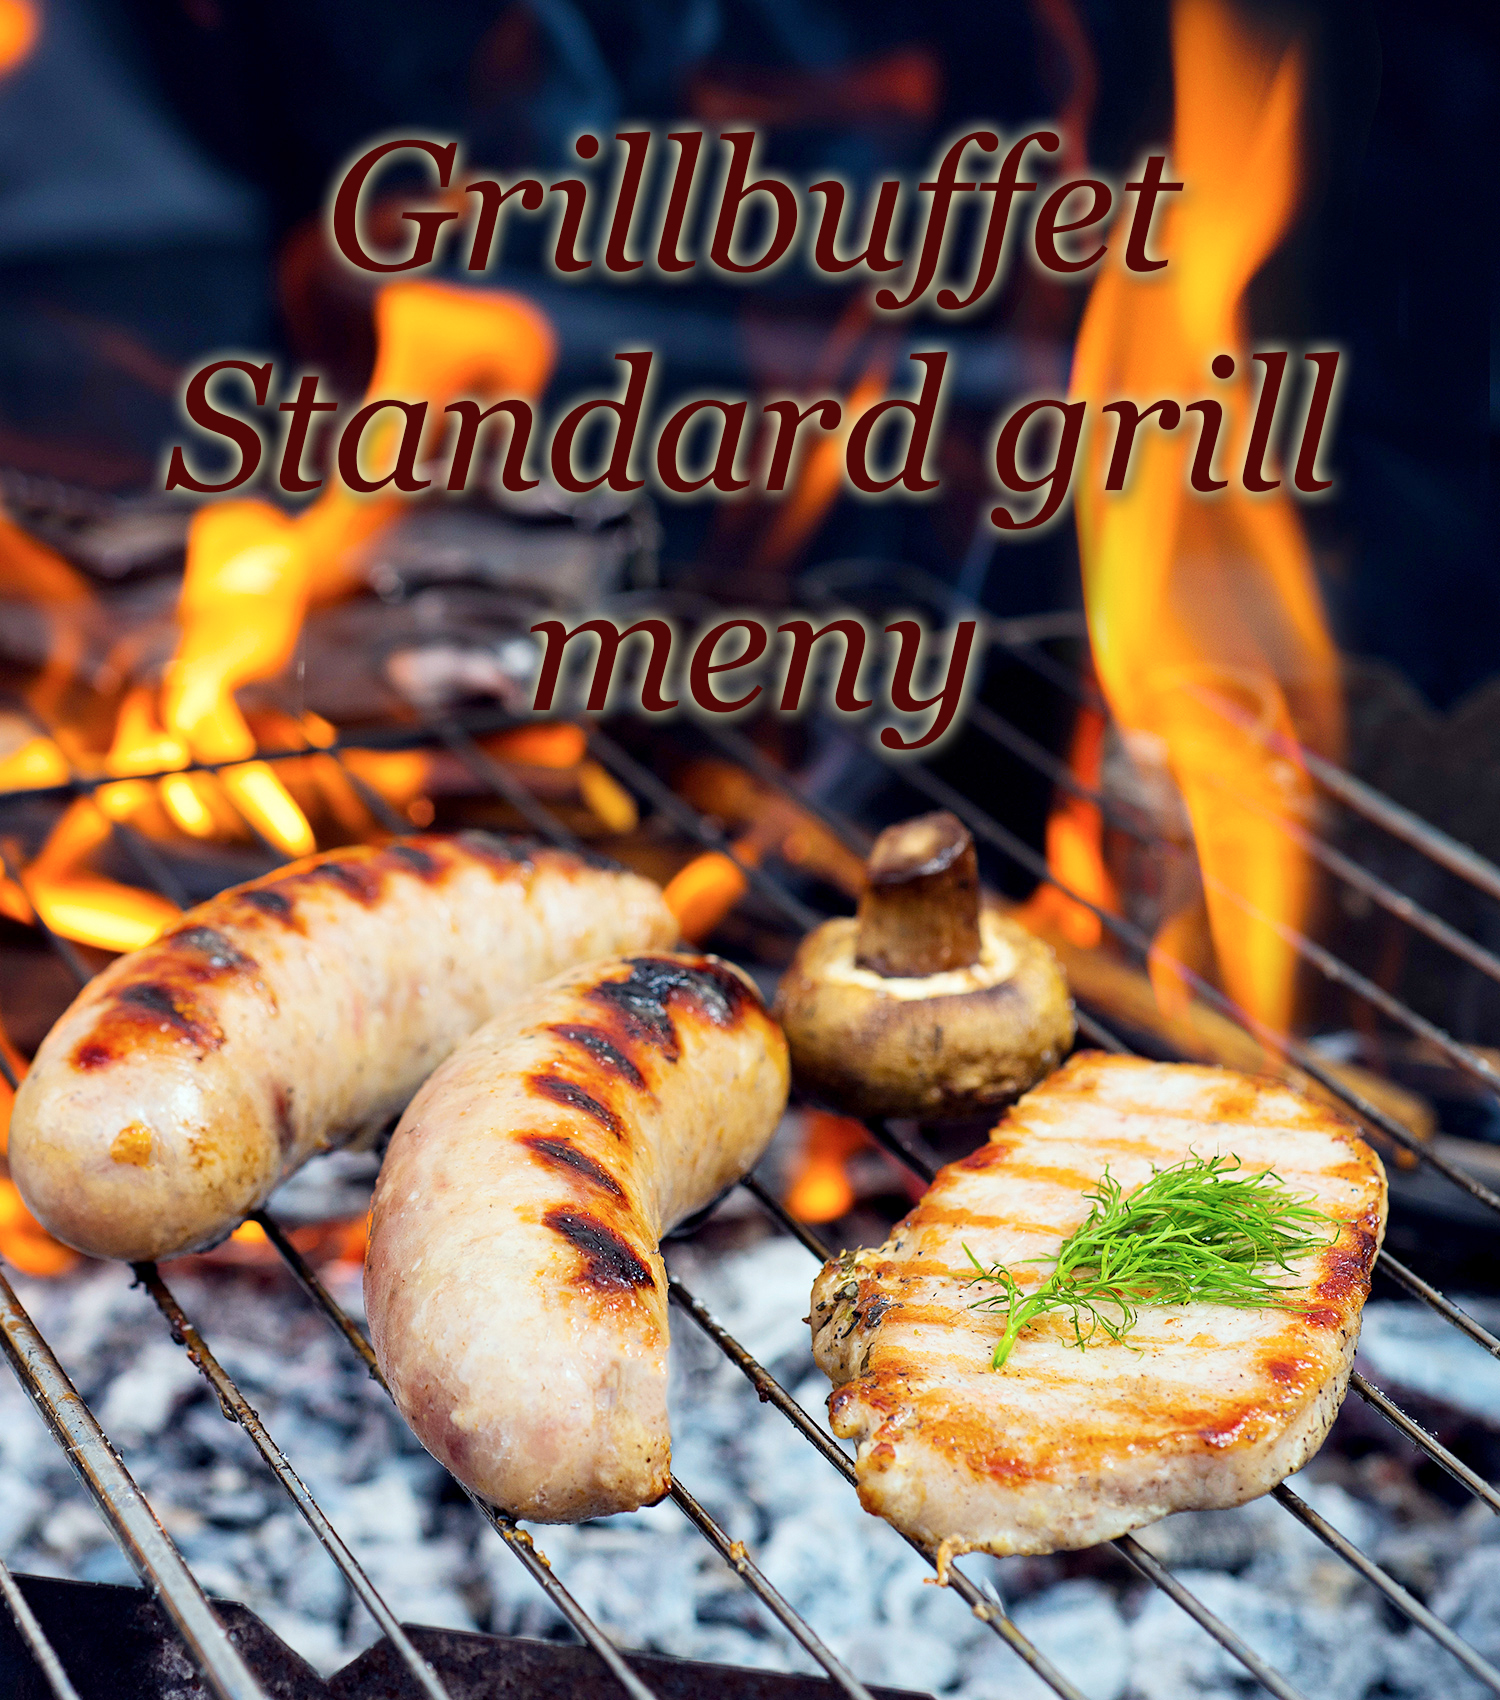 Grillbuffet, Standard Grill Meny